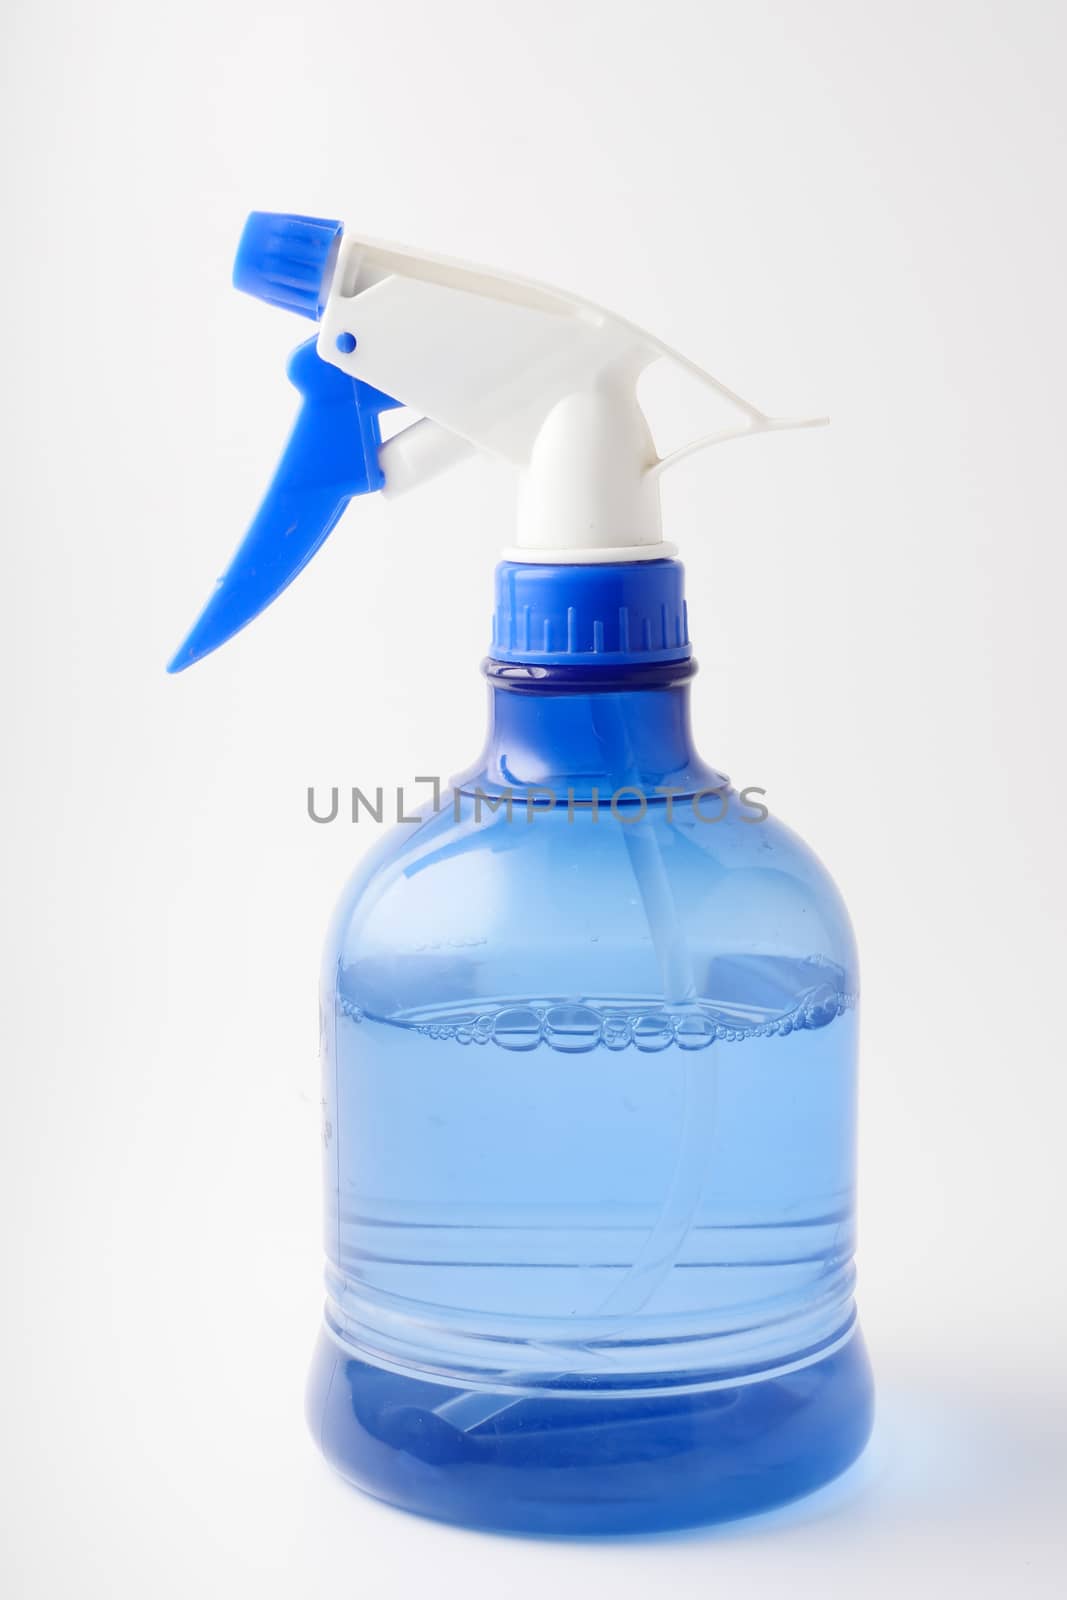 Spray bottle on a white background. Splashing water.